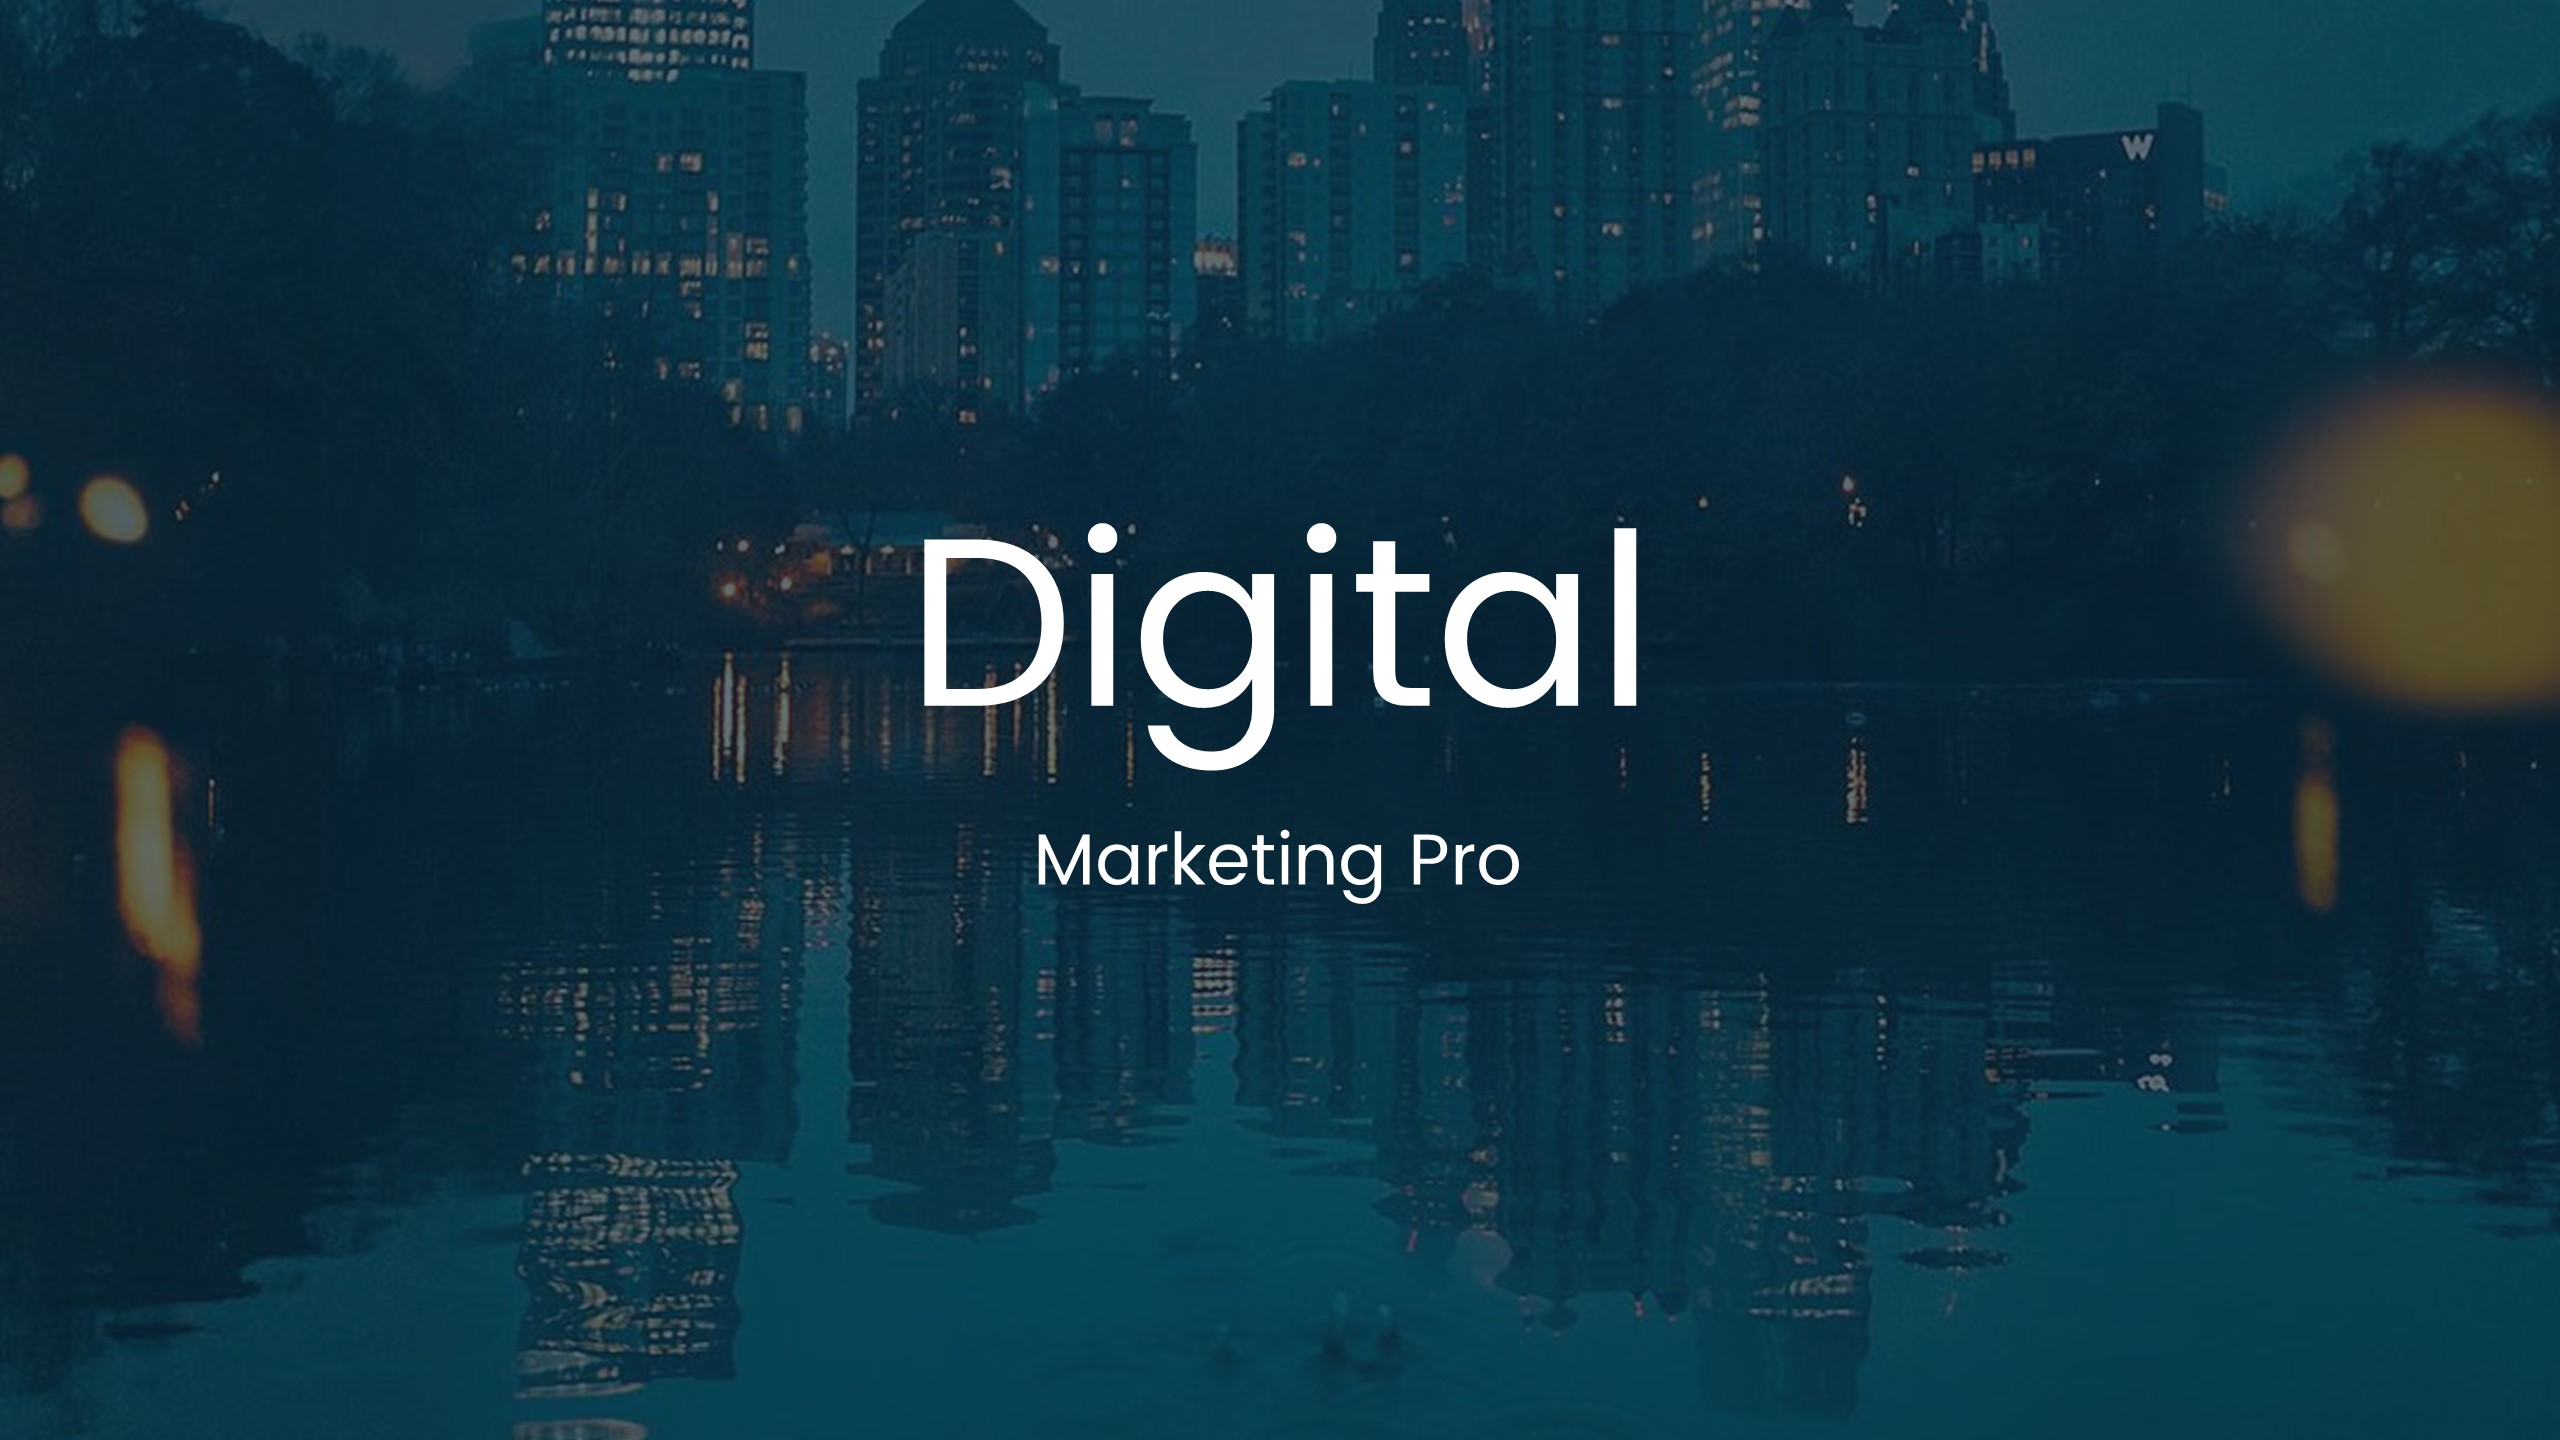 PowerPoint Template for Digital Marketing Plan